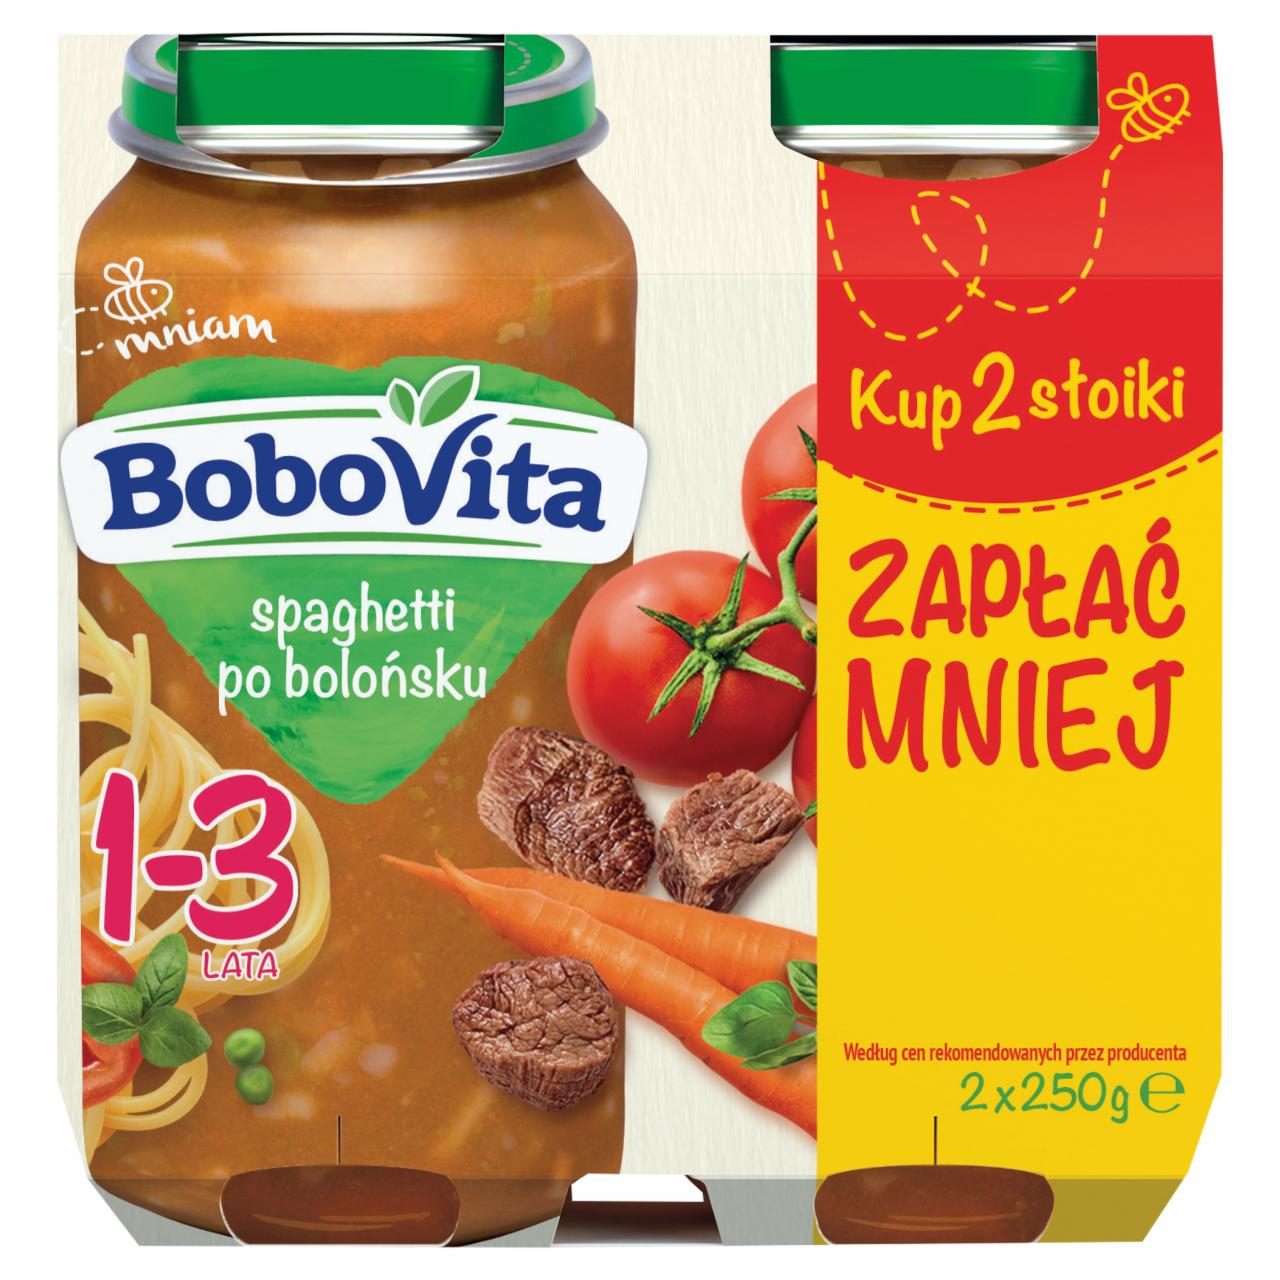 Zdjęcia - BoboVita Spaghetti po bolońsku 1-3 lata 2 x 250 g